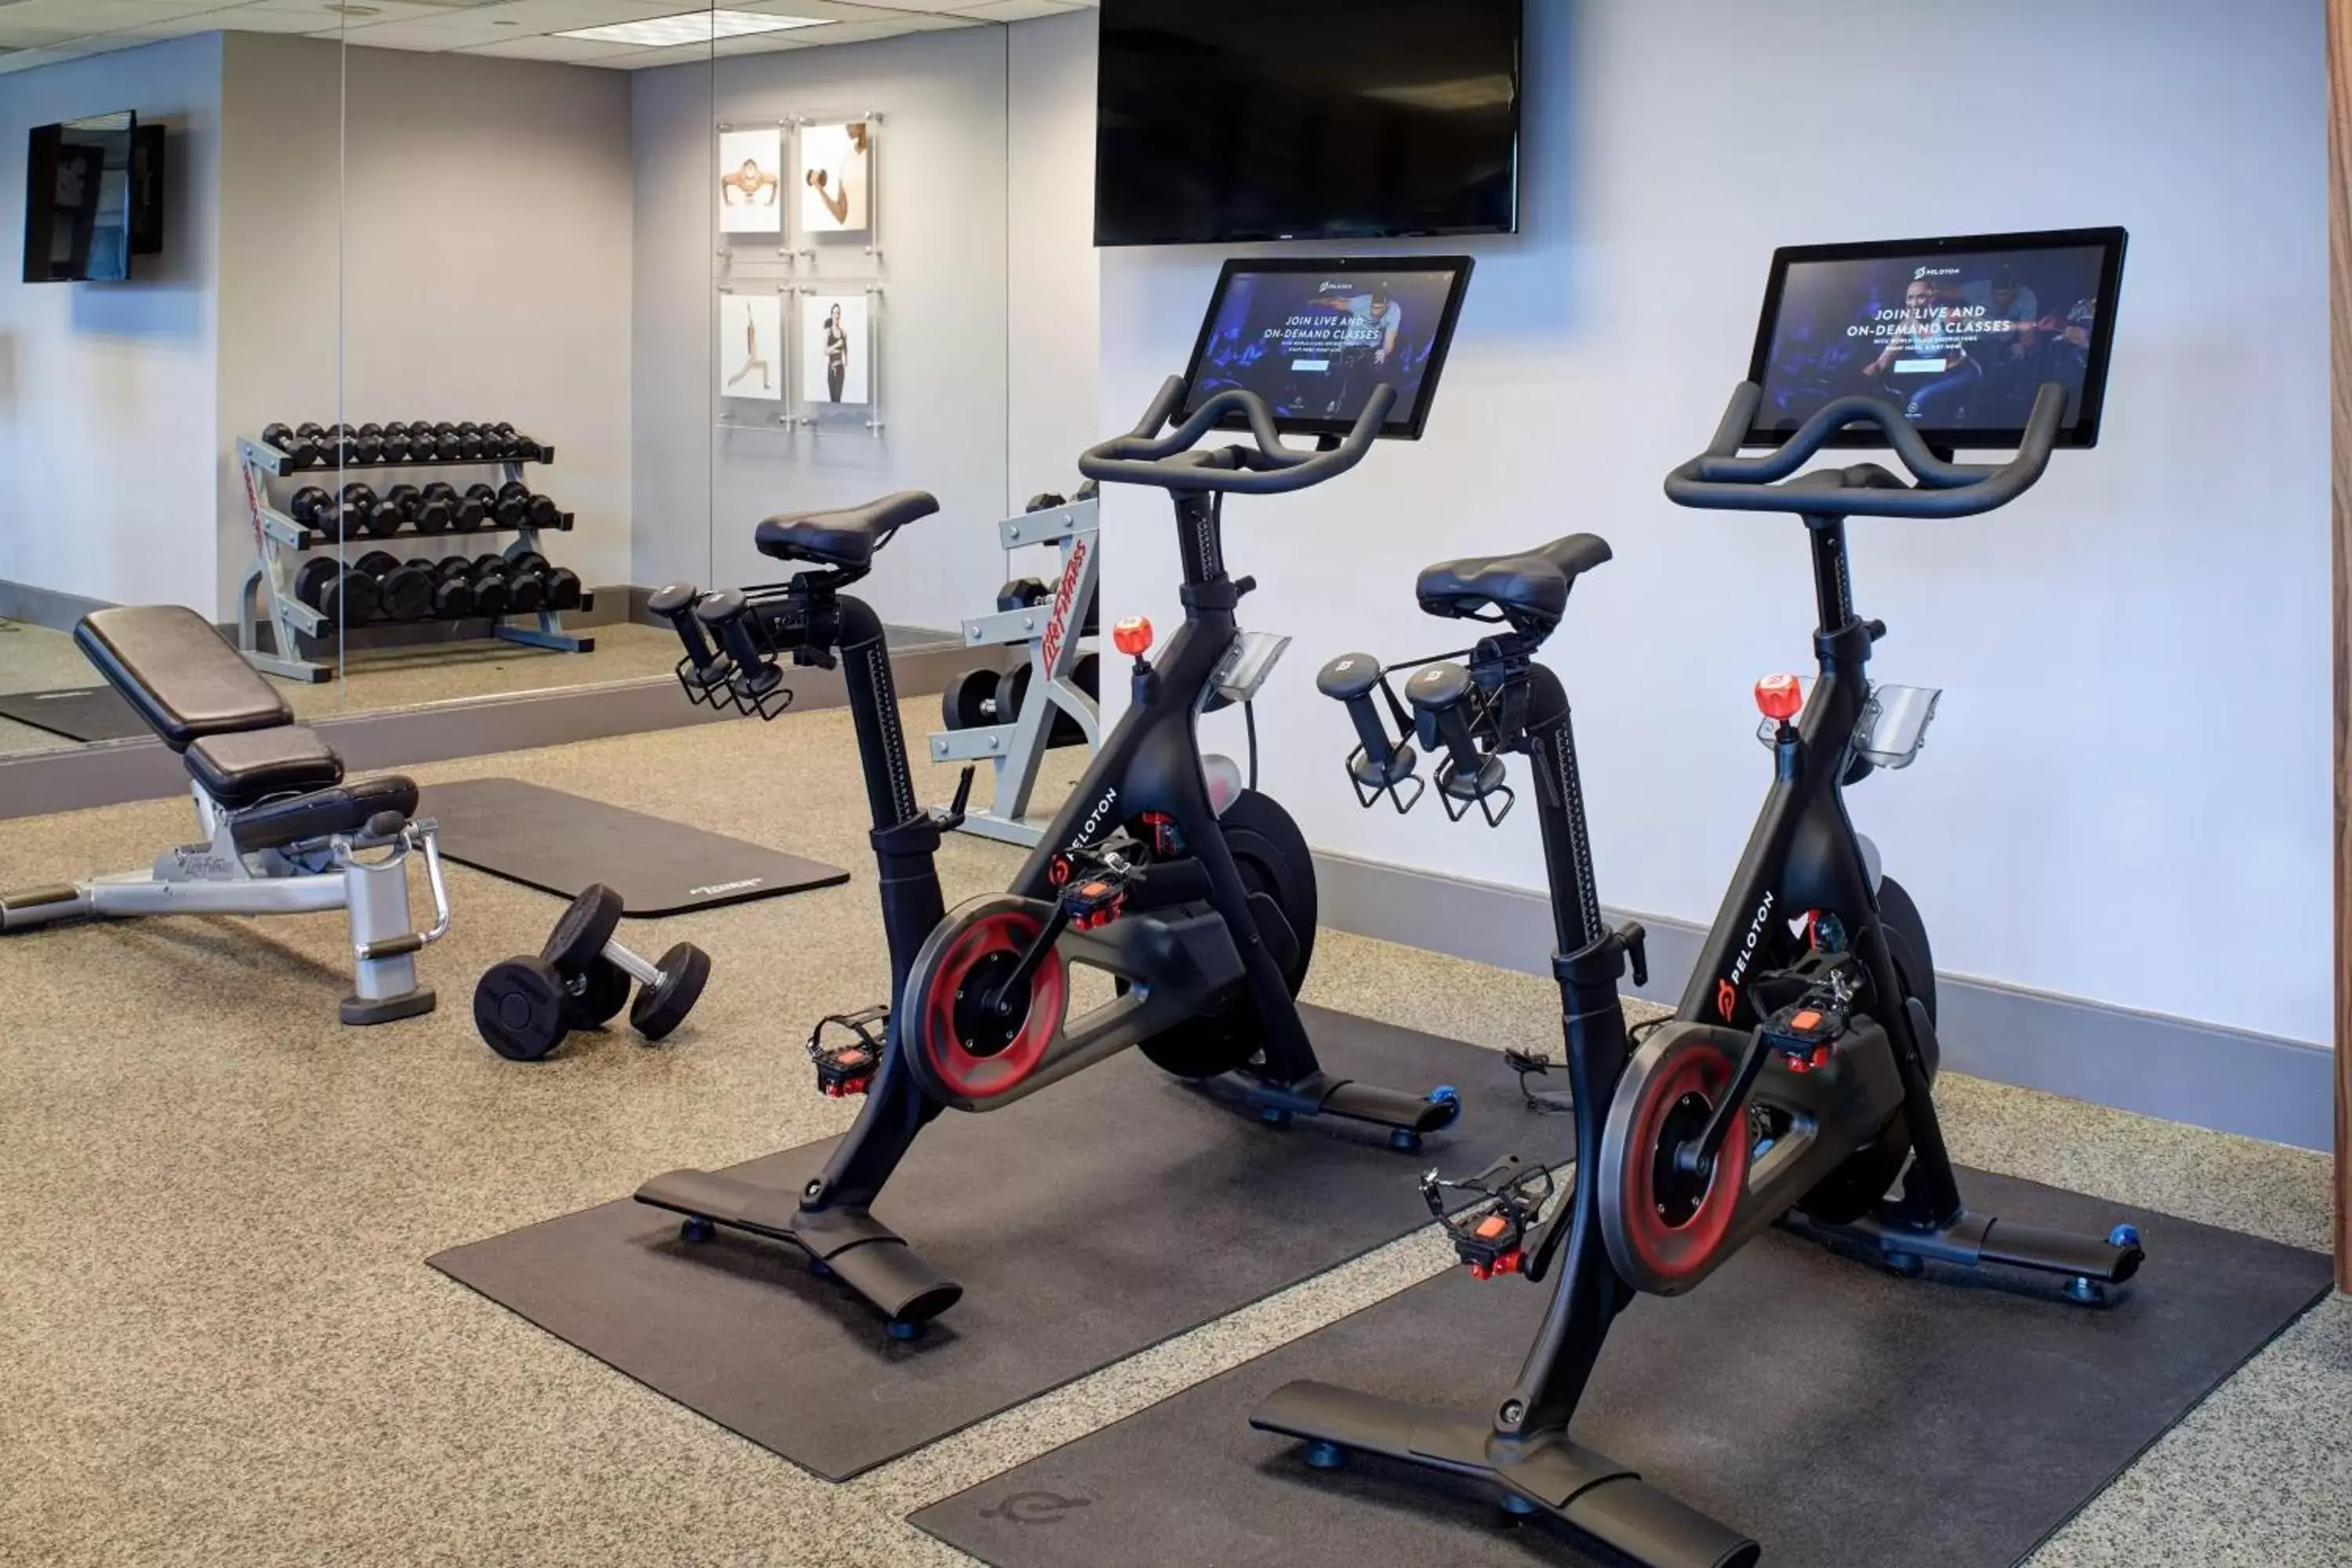 Fitness centre/facilities, Fitness Center/Facilities in Auburn Hills Marriott Pontiac